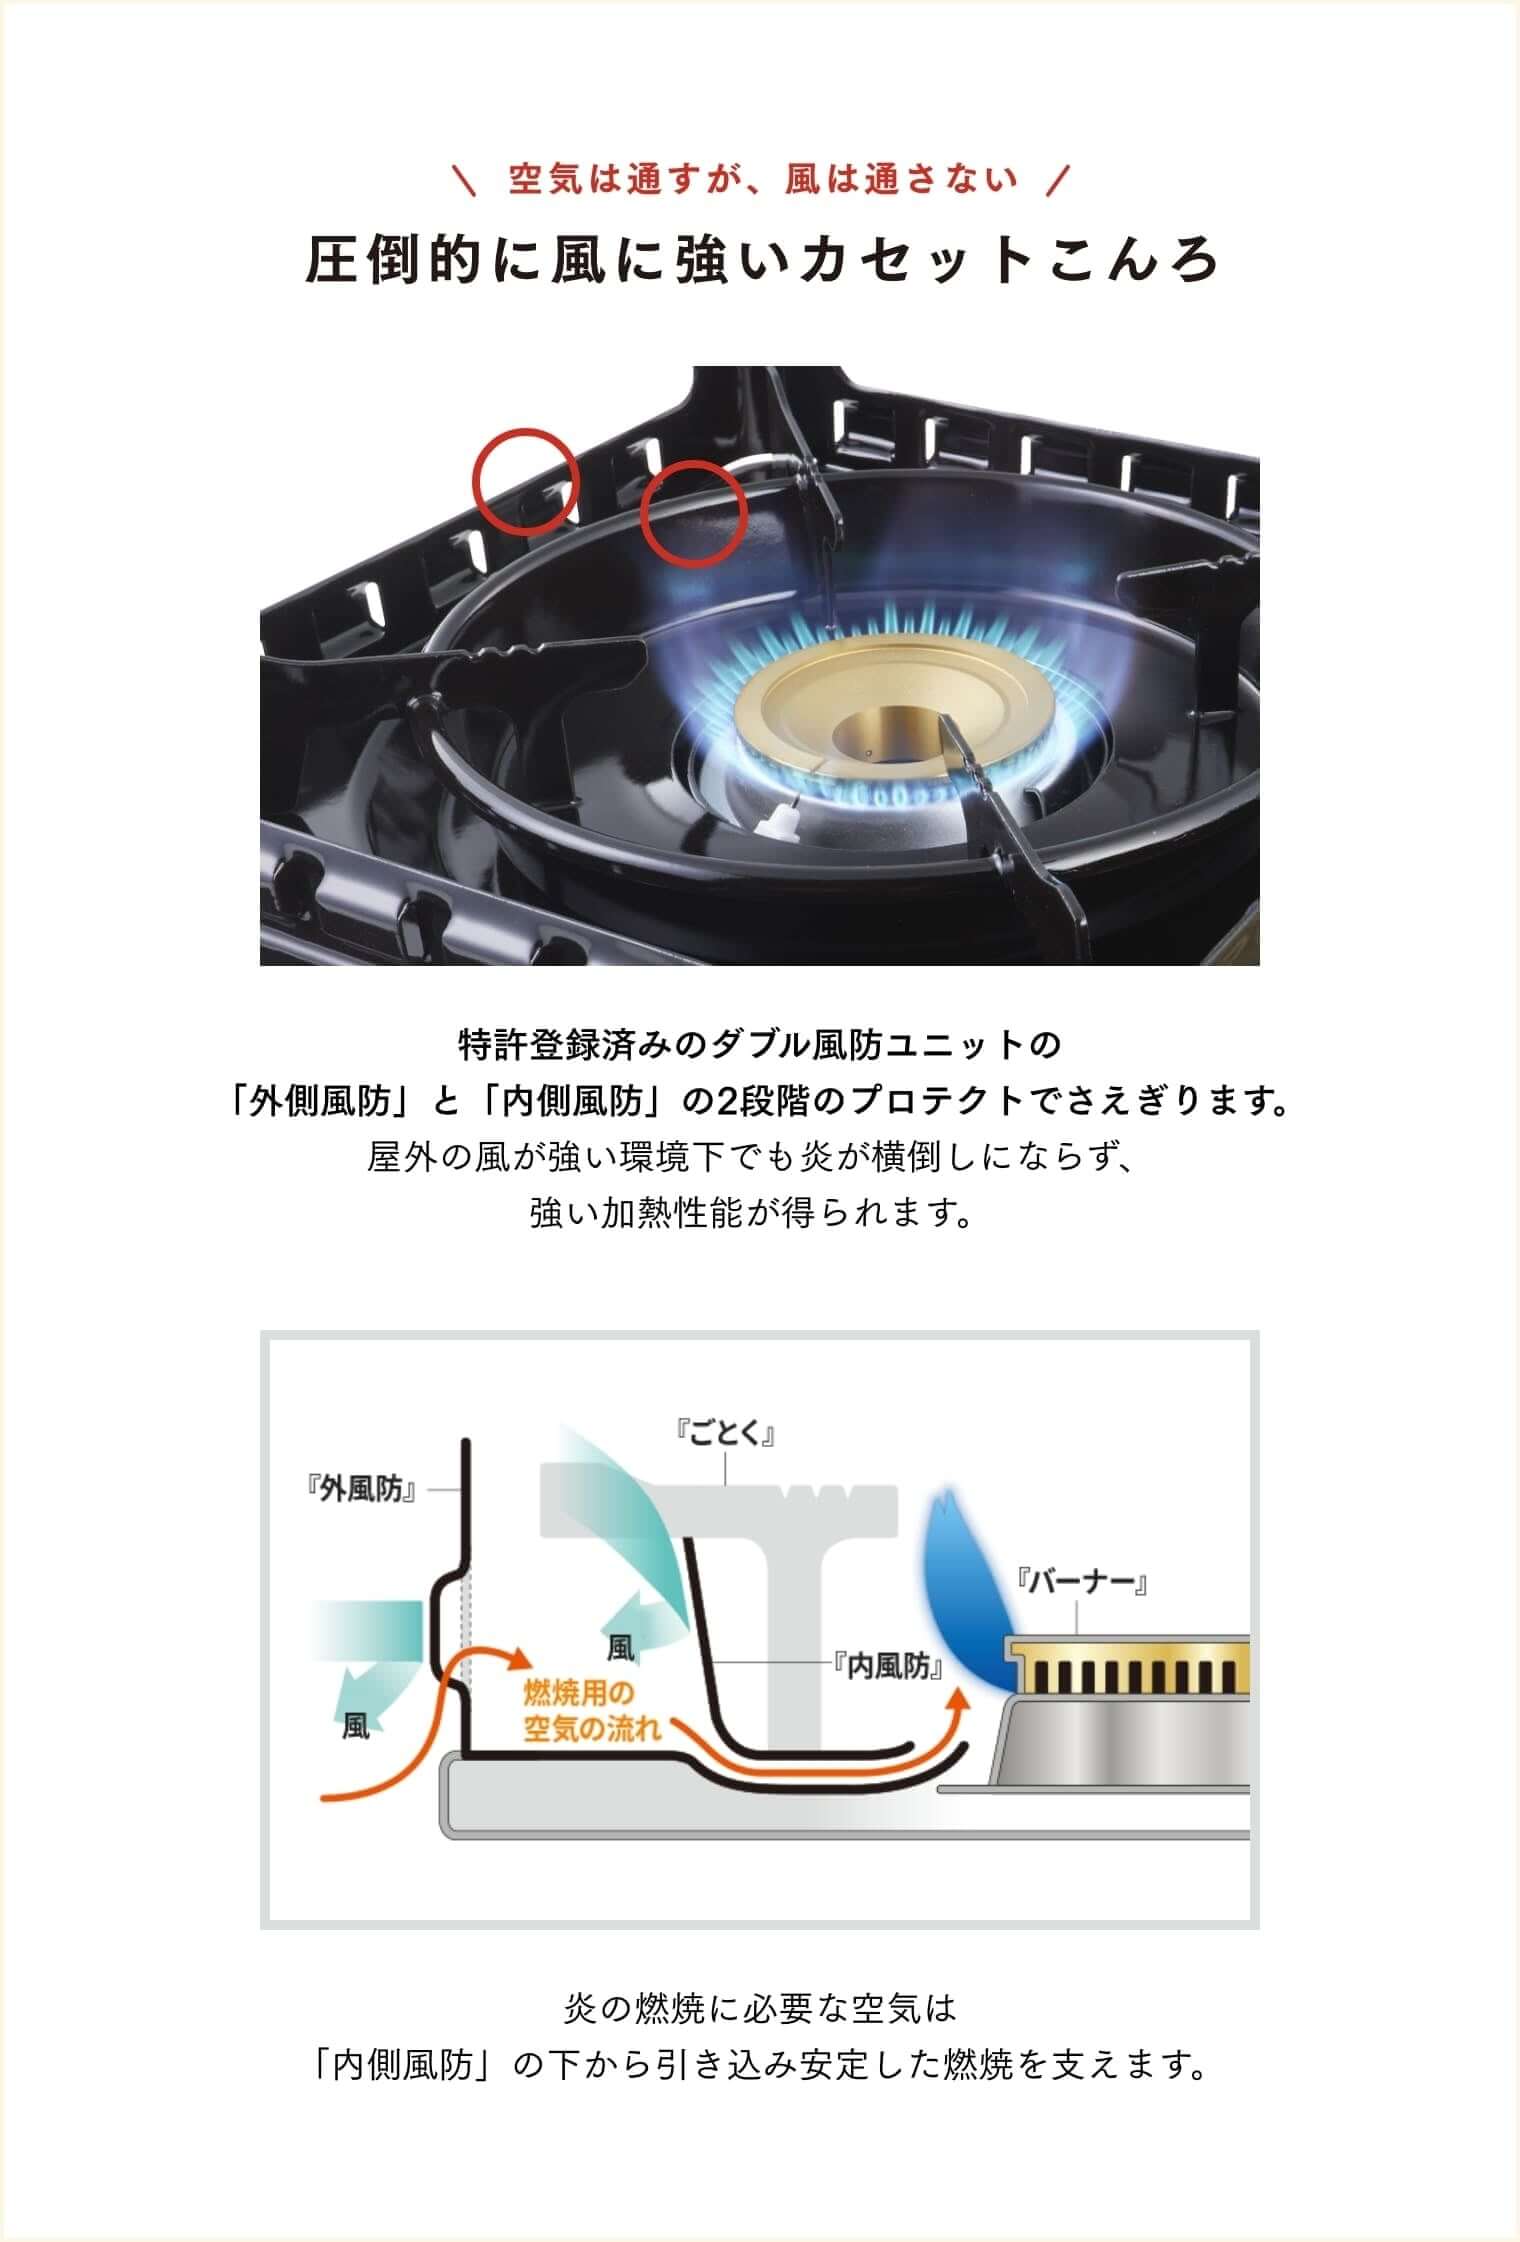 Iwatani ABURIYA Portable Gas Grill Stove CB-ABR-1 Free Shipping New in the  Box